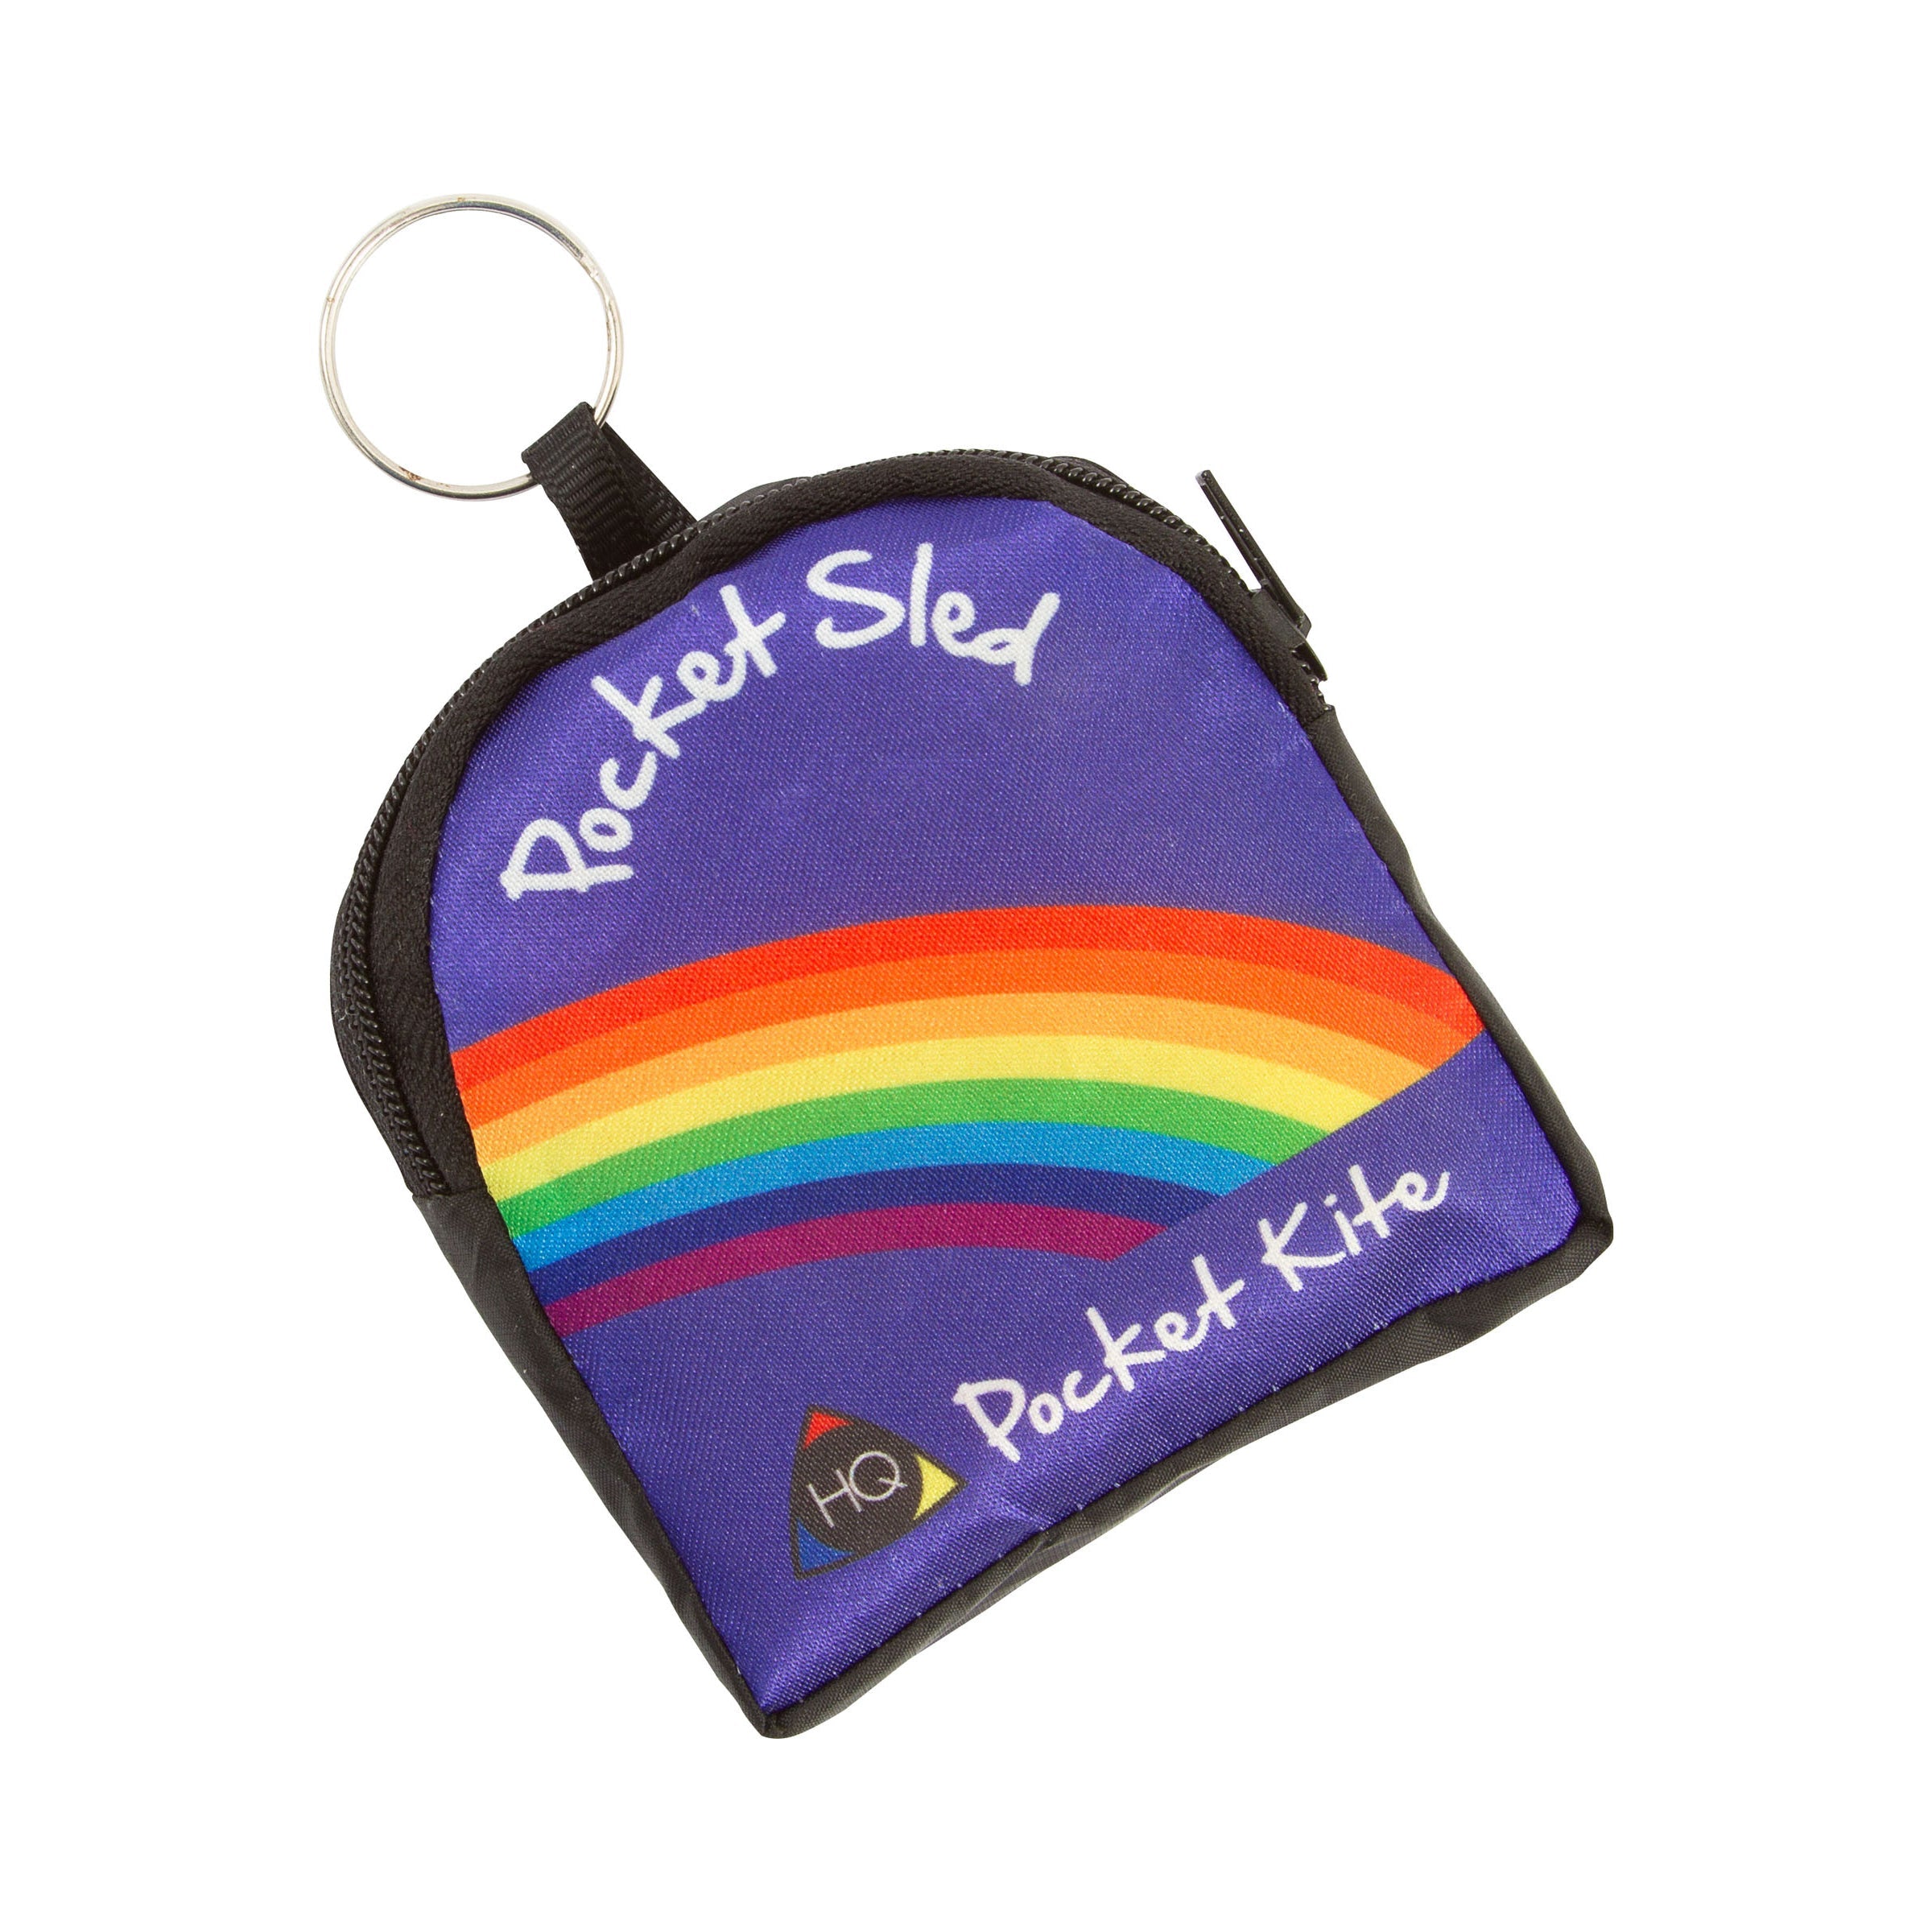 NEW Pocket Rainbow Outdoor Kite